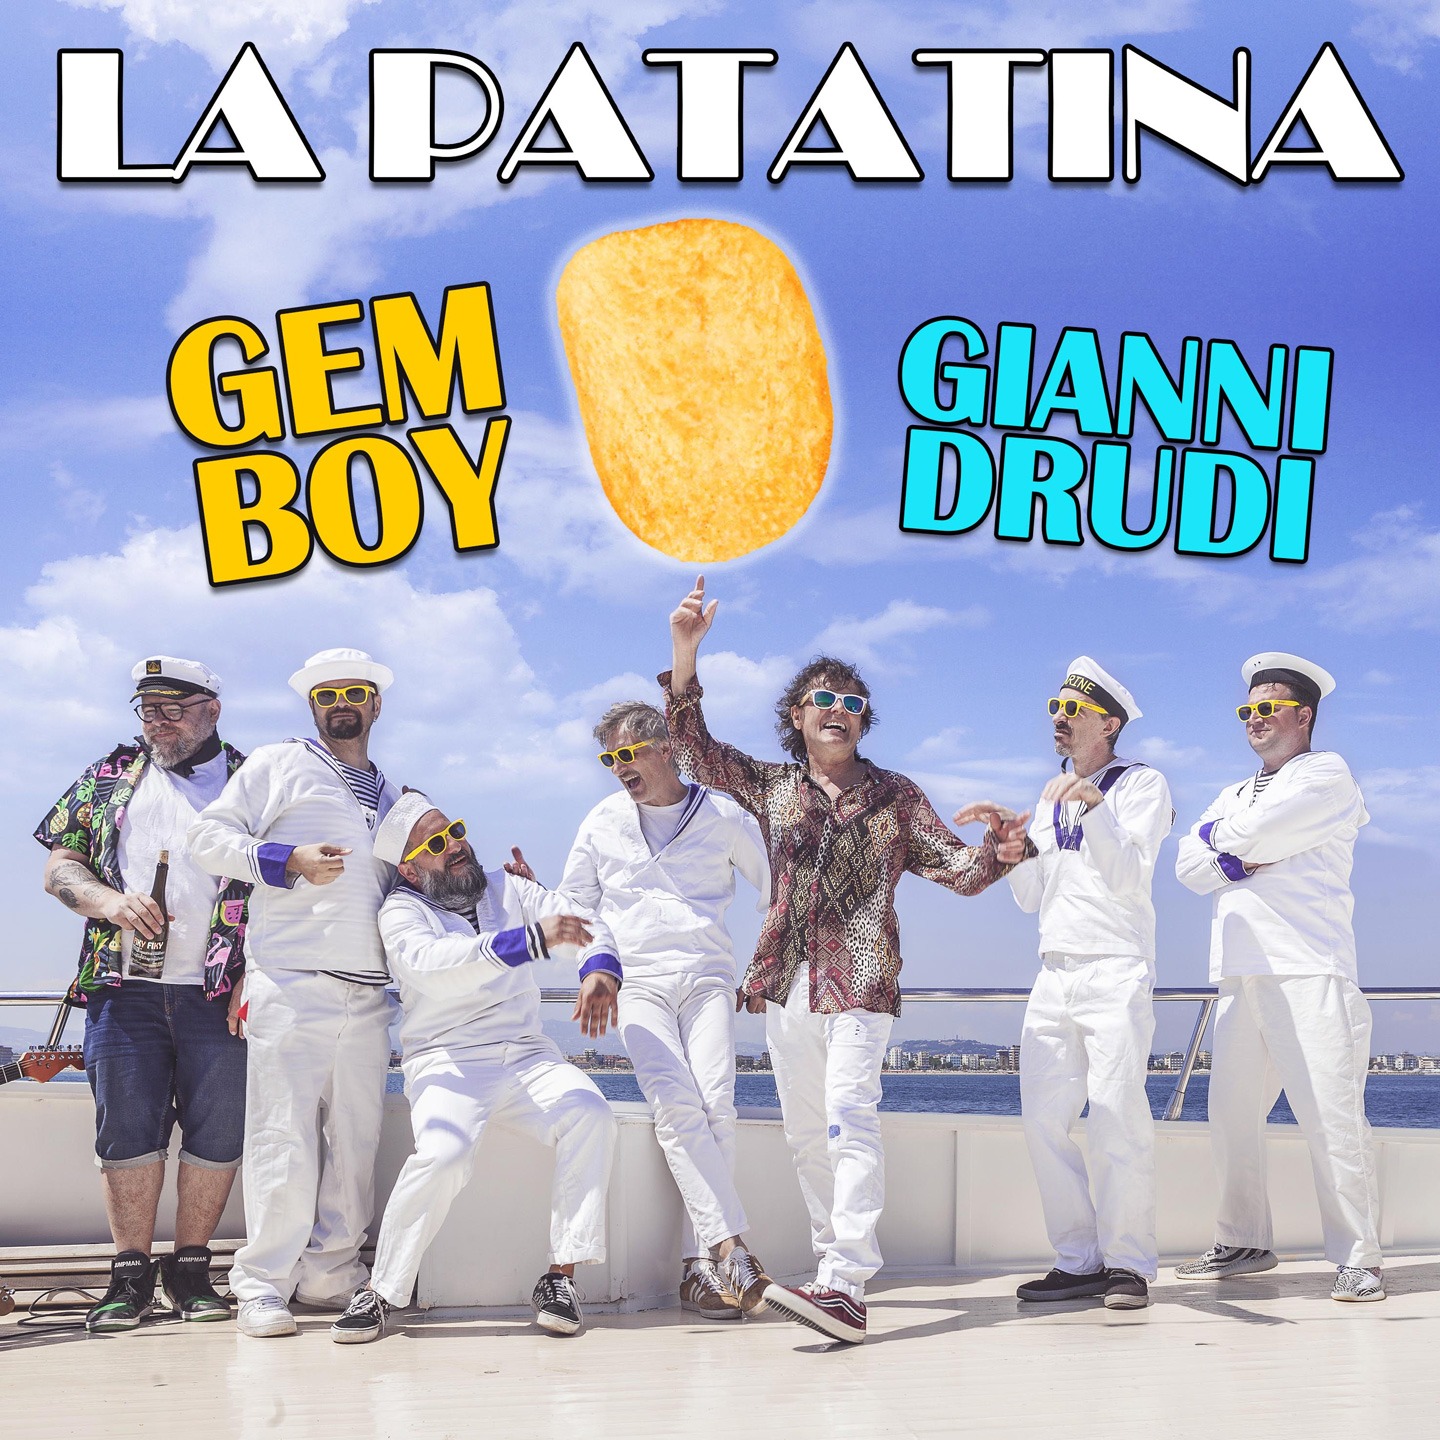 “La Patatina” dei Gem Boy e Gianni Drudi.